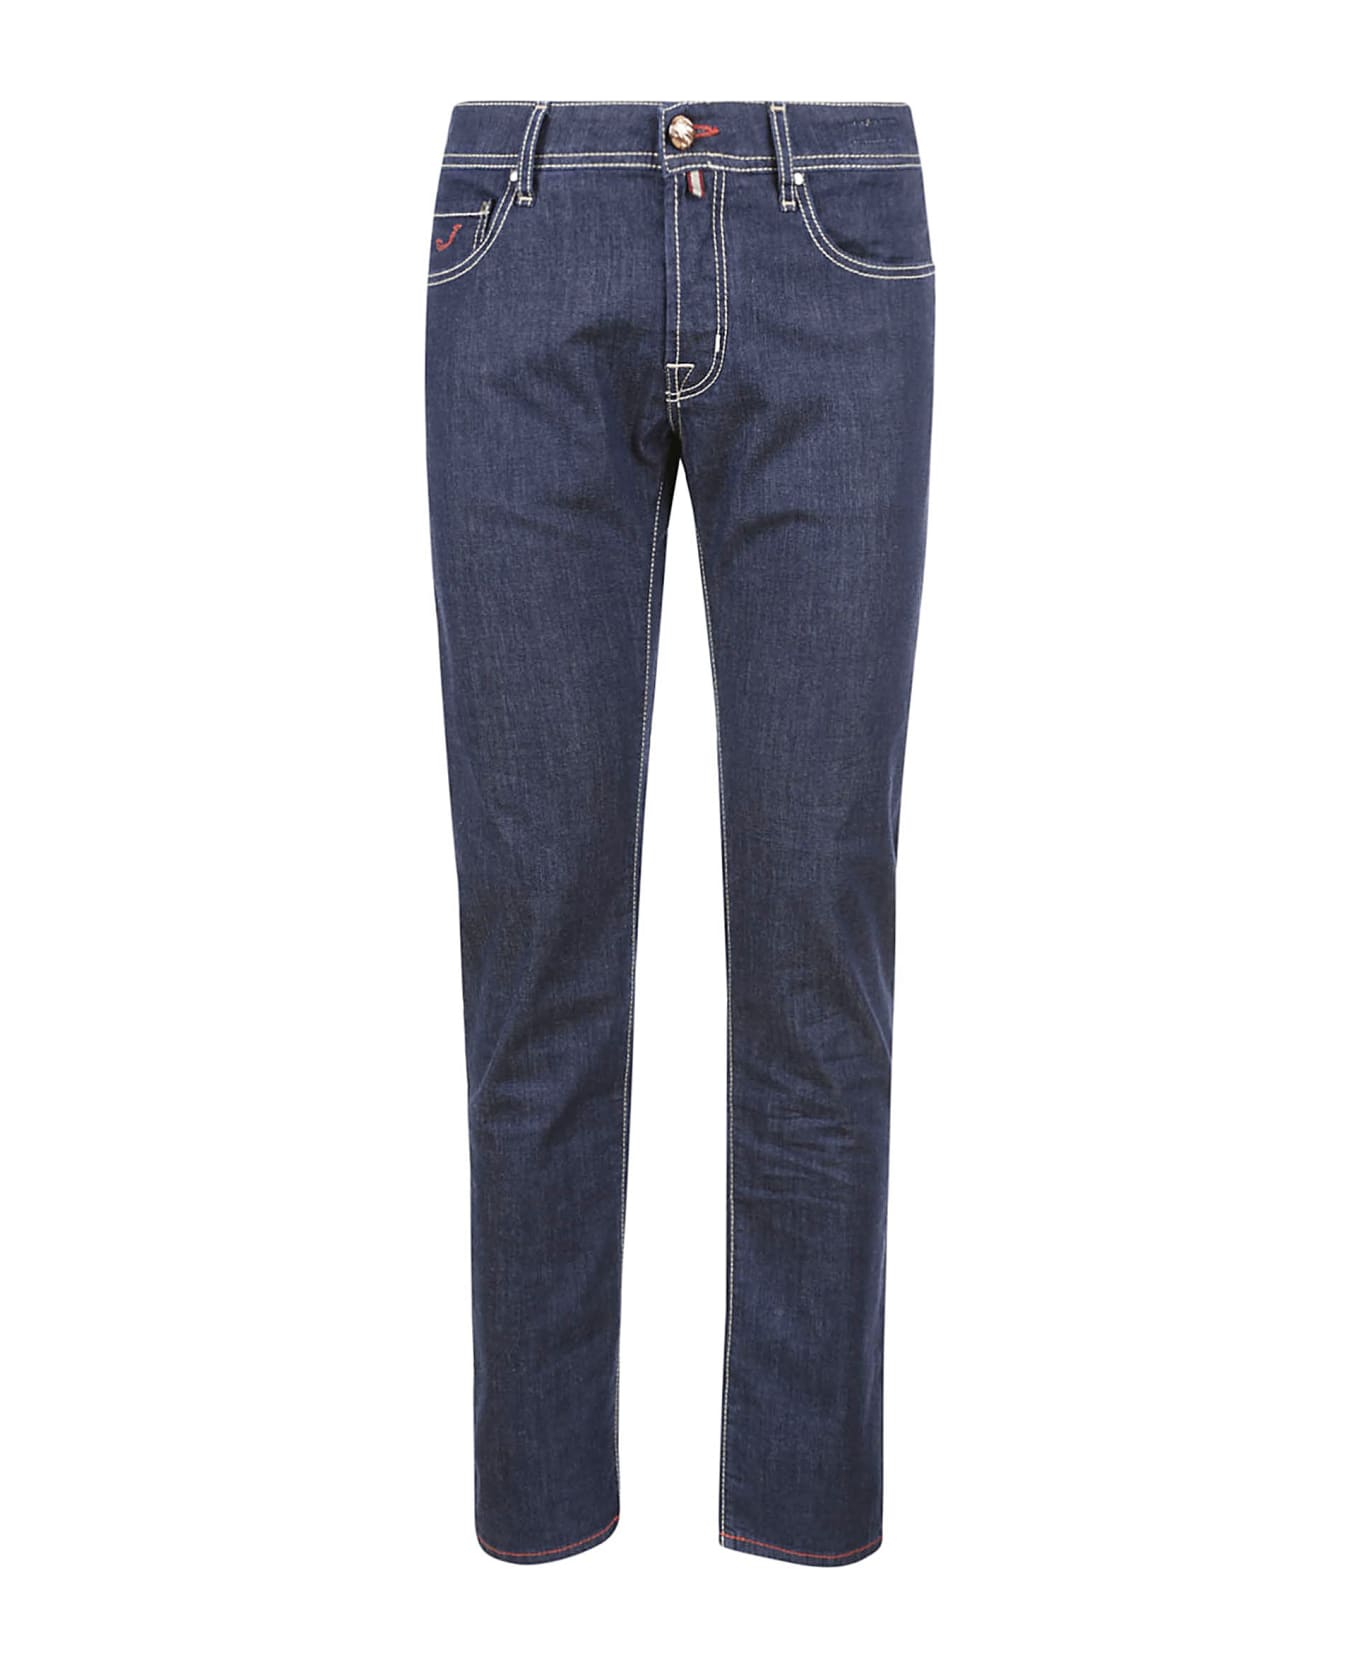 Jacob Cohen Super Slim Fit Jeans - Azzurro デニム